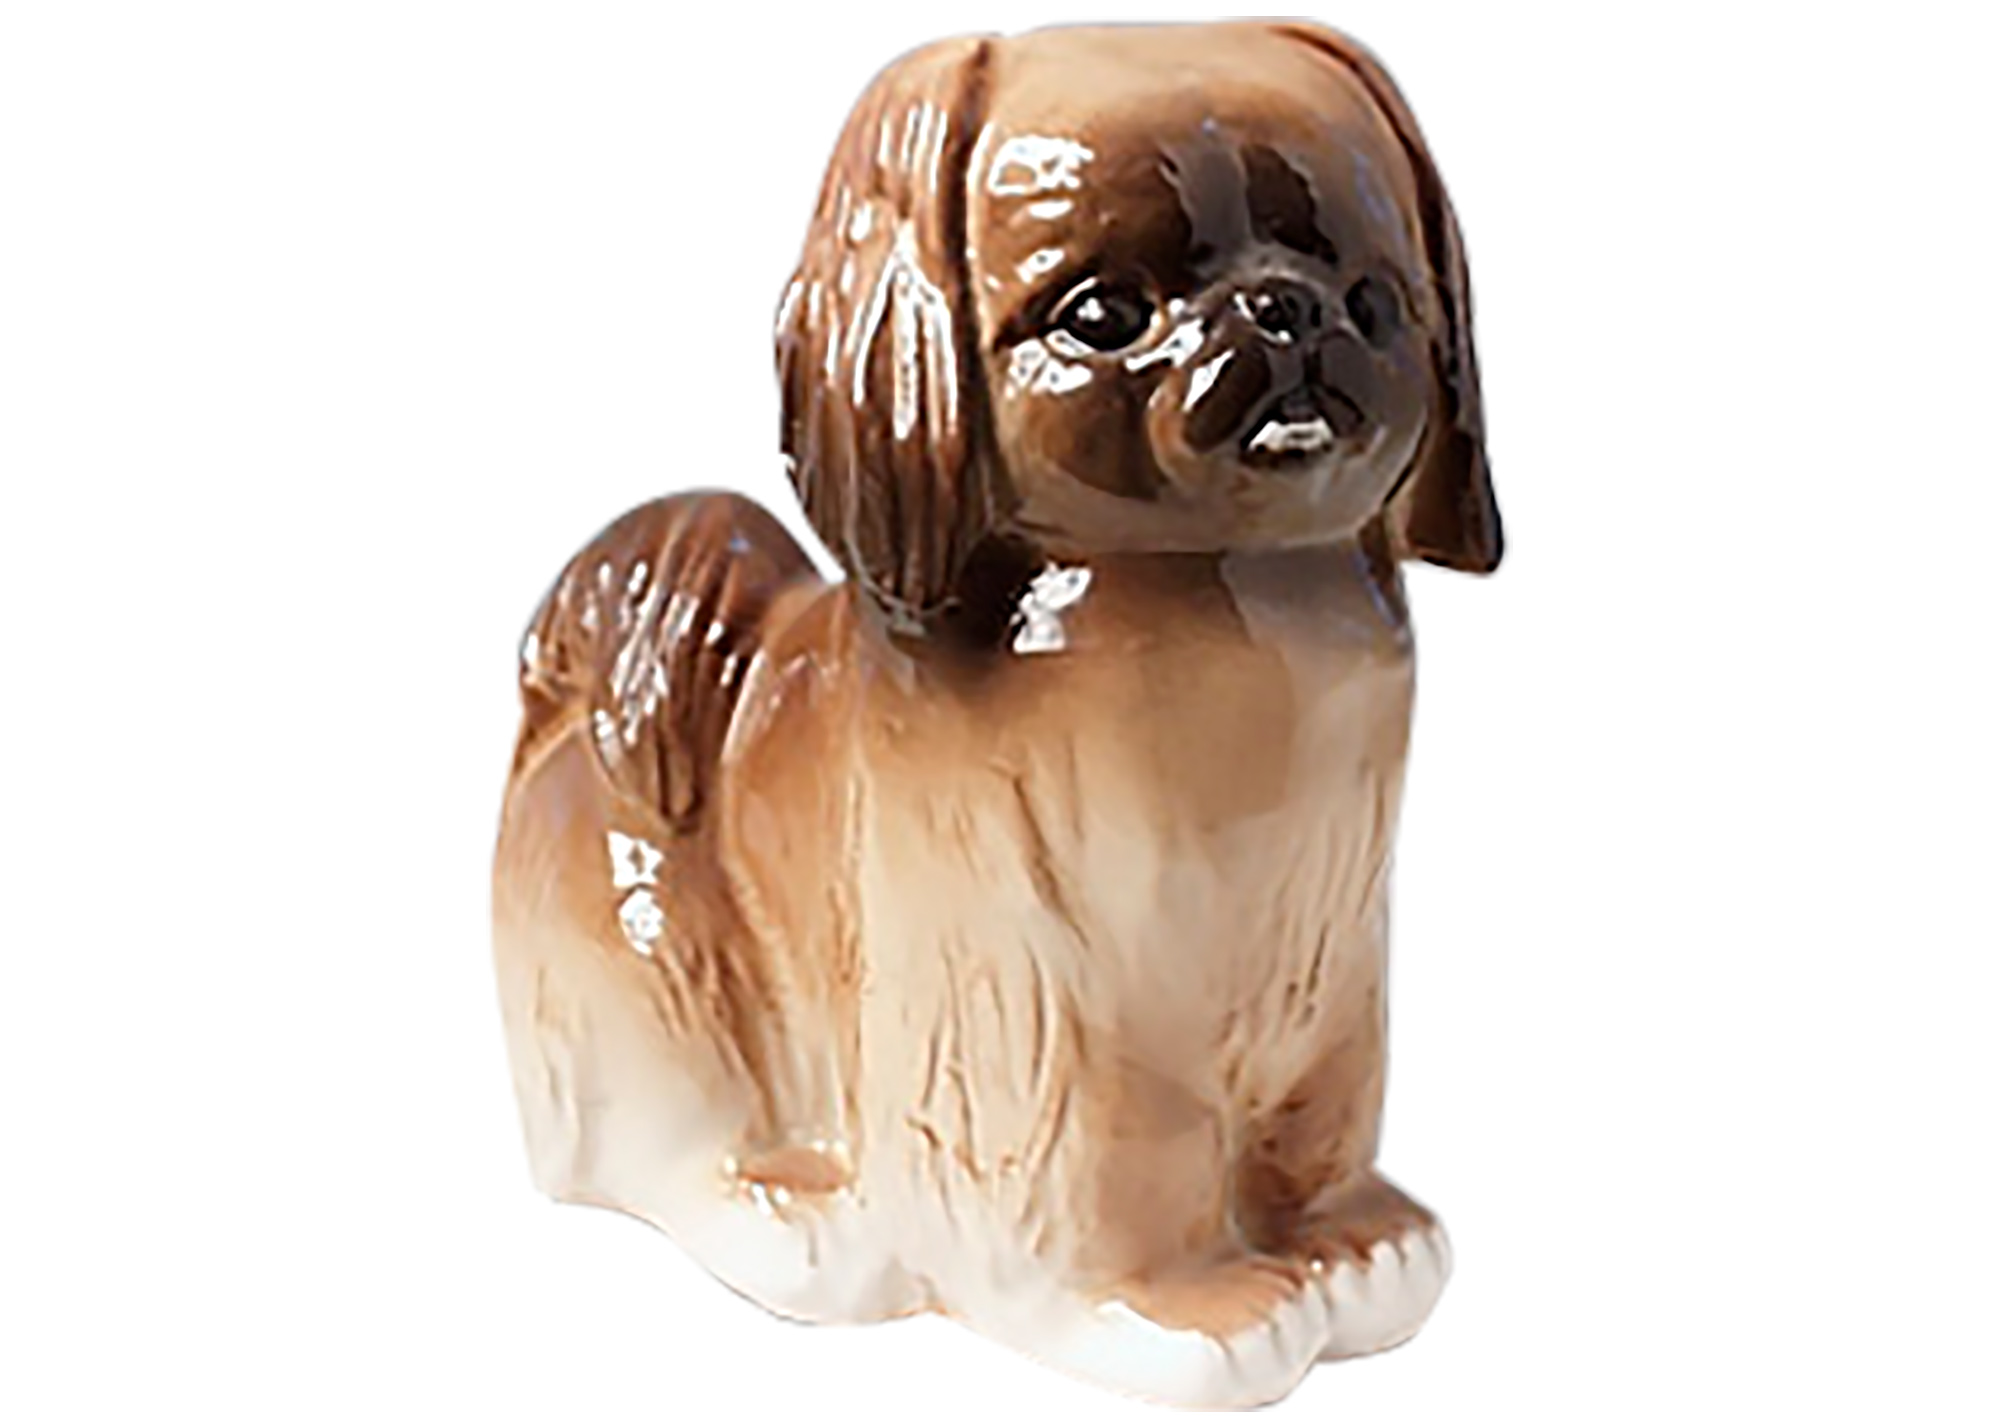 Buy Pekinese Dog Figurine at GoldenCockerel.com